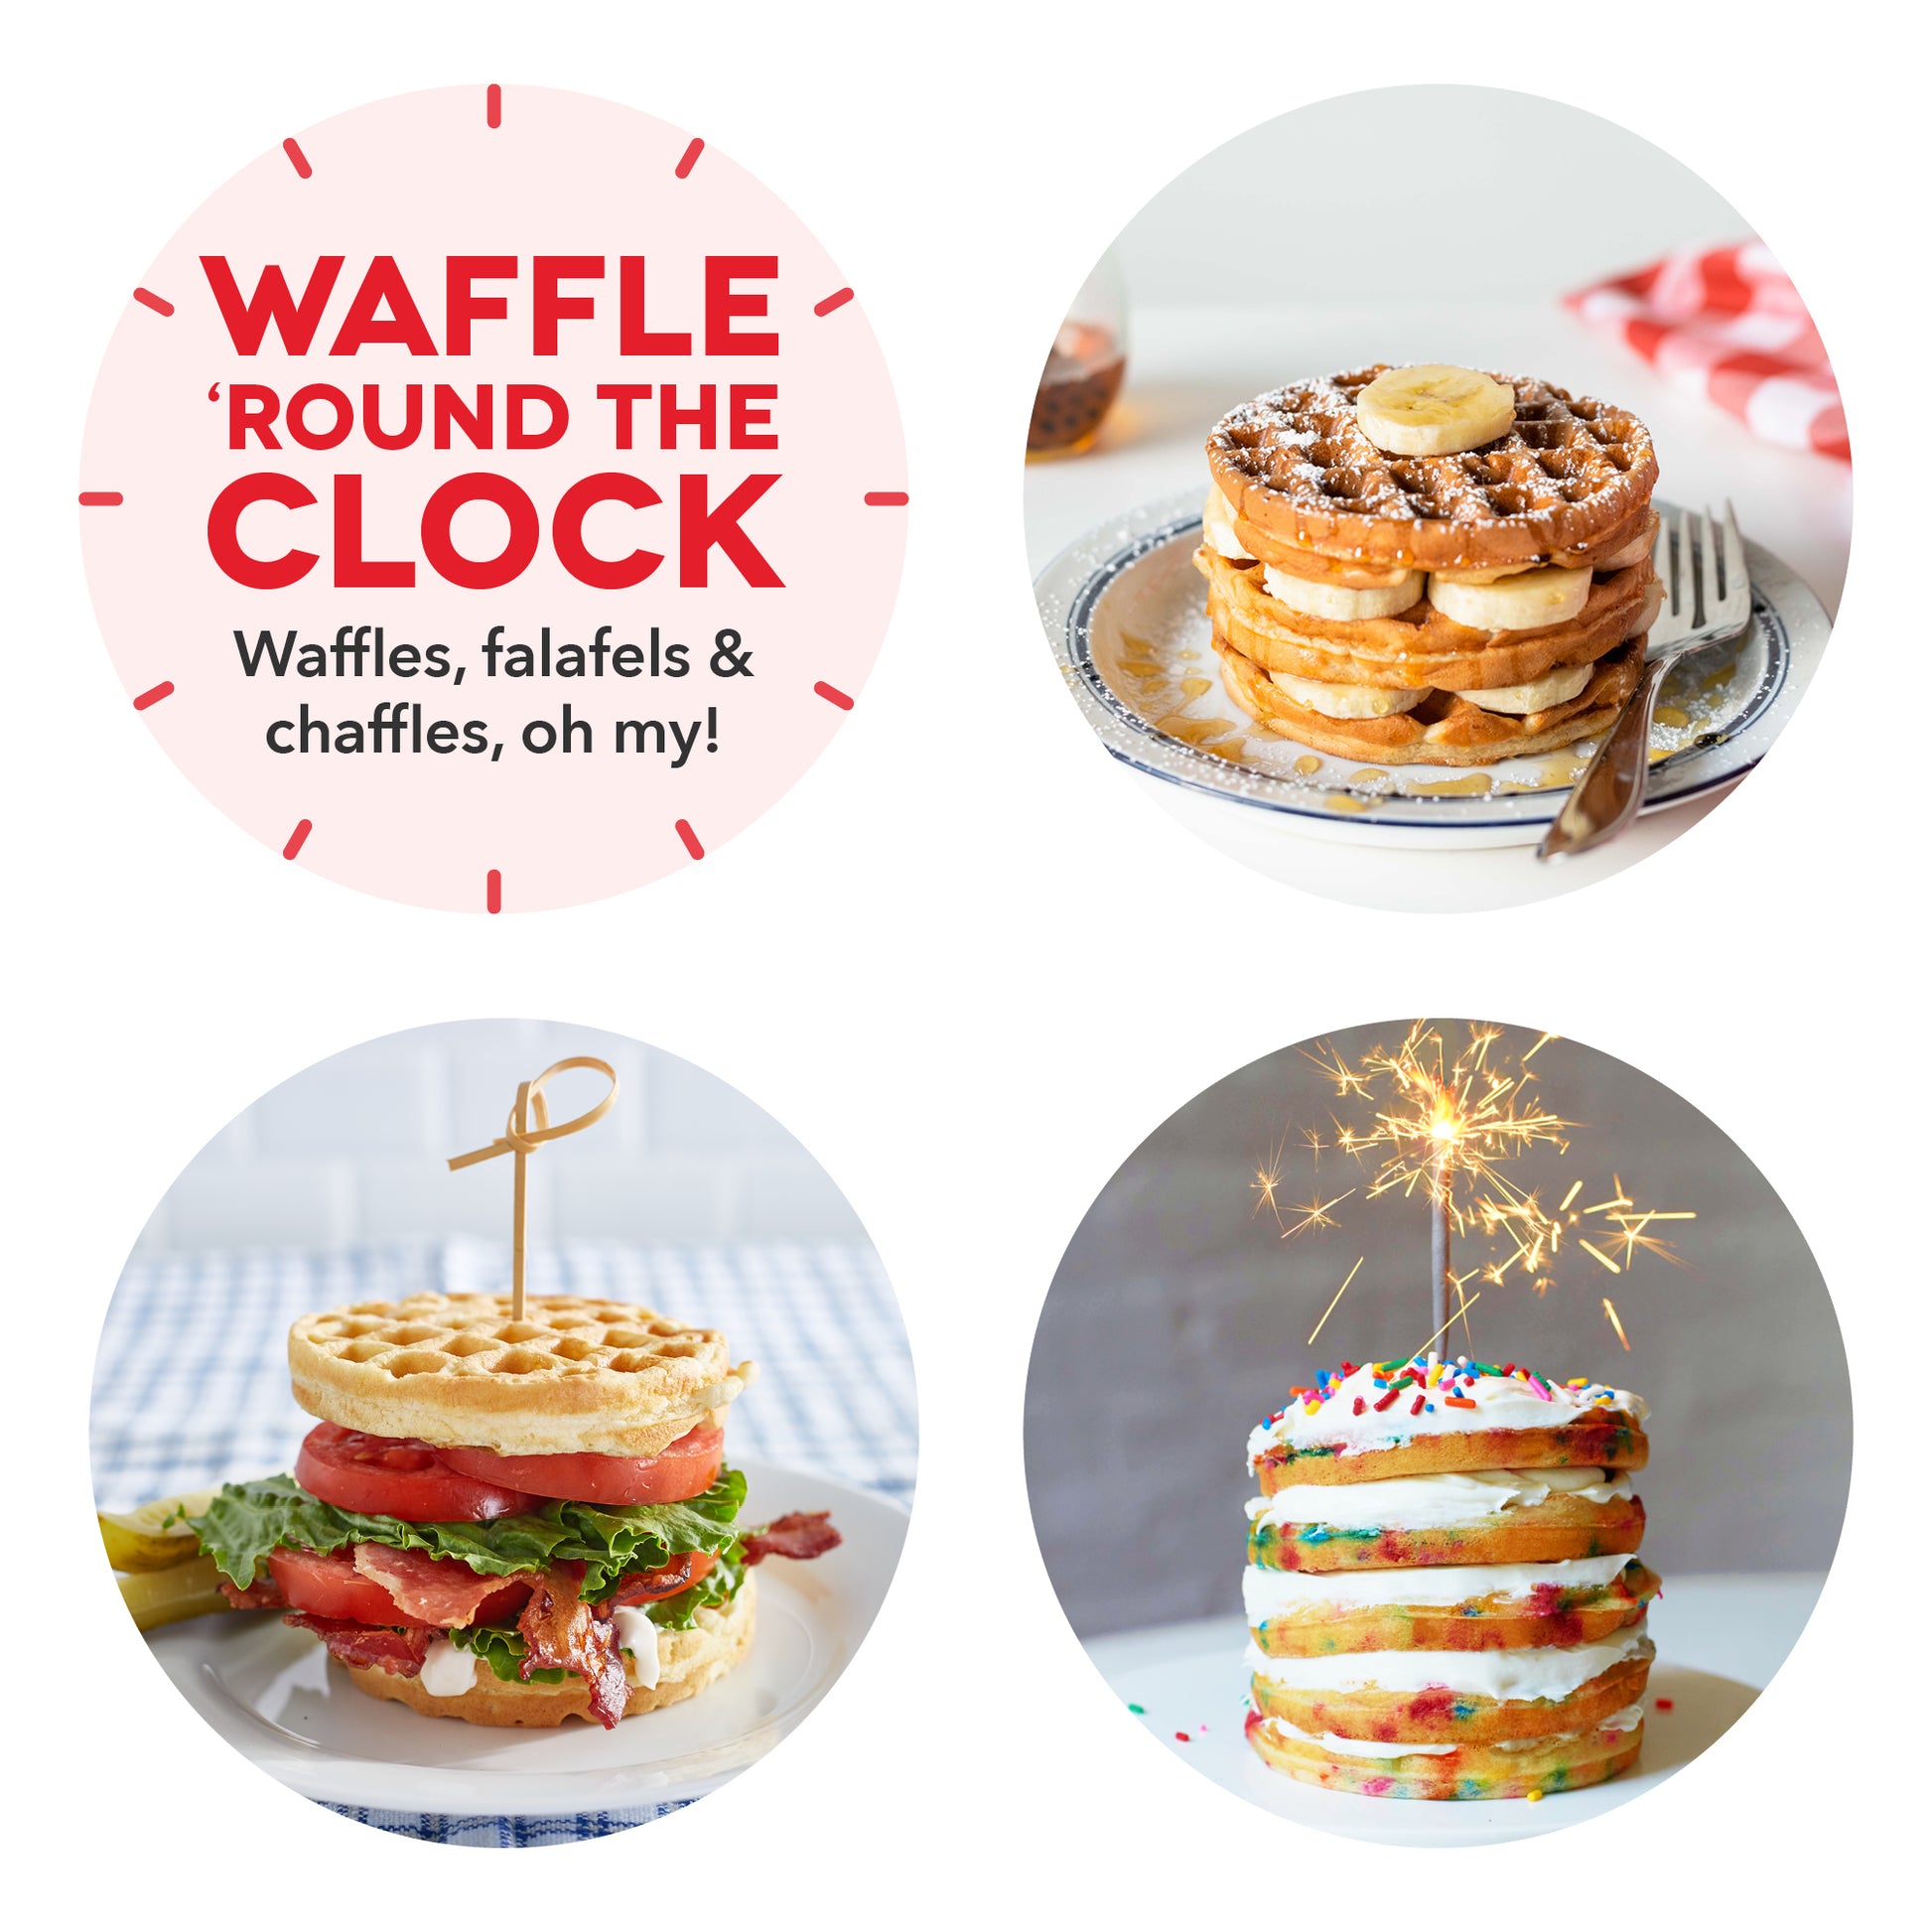 This Costco Mini Waffle Maker Creates the Cutest Themed Waffles